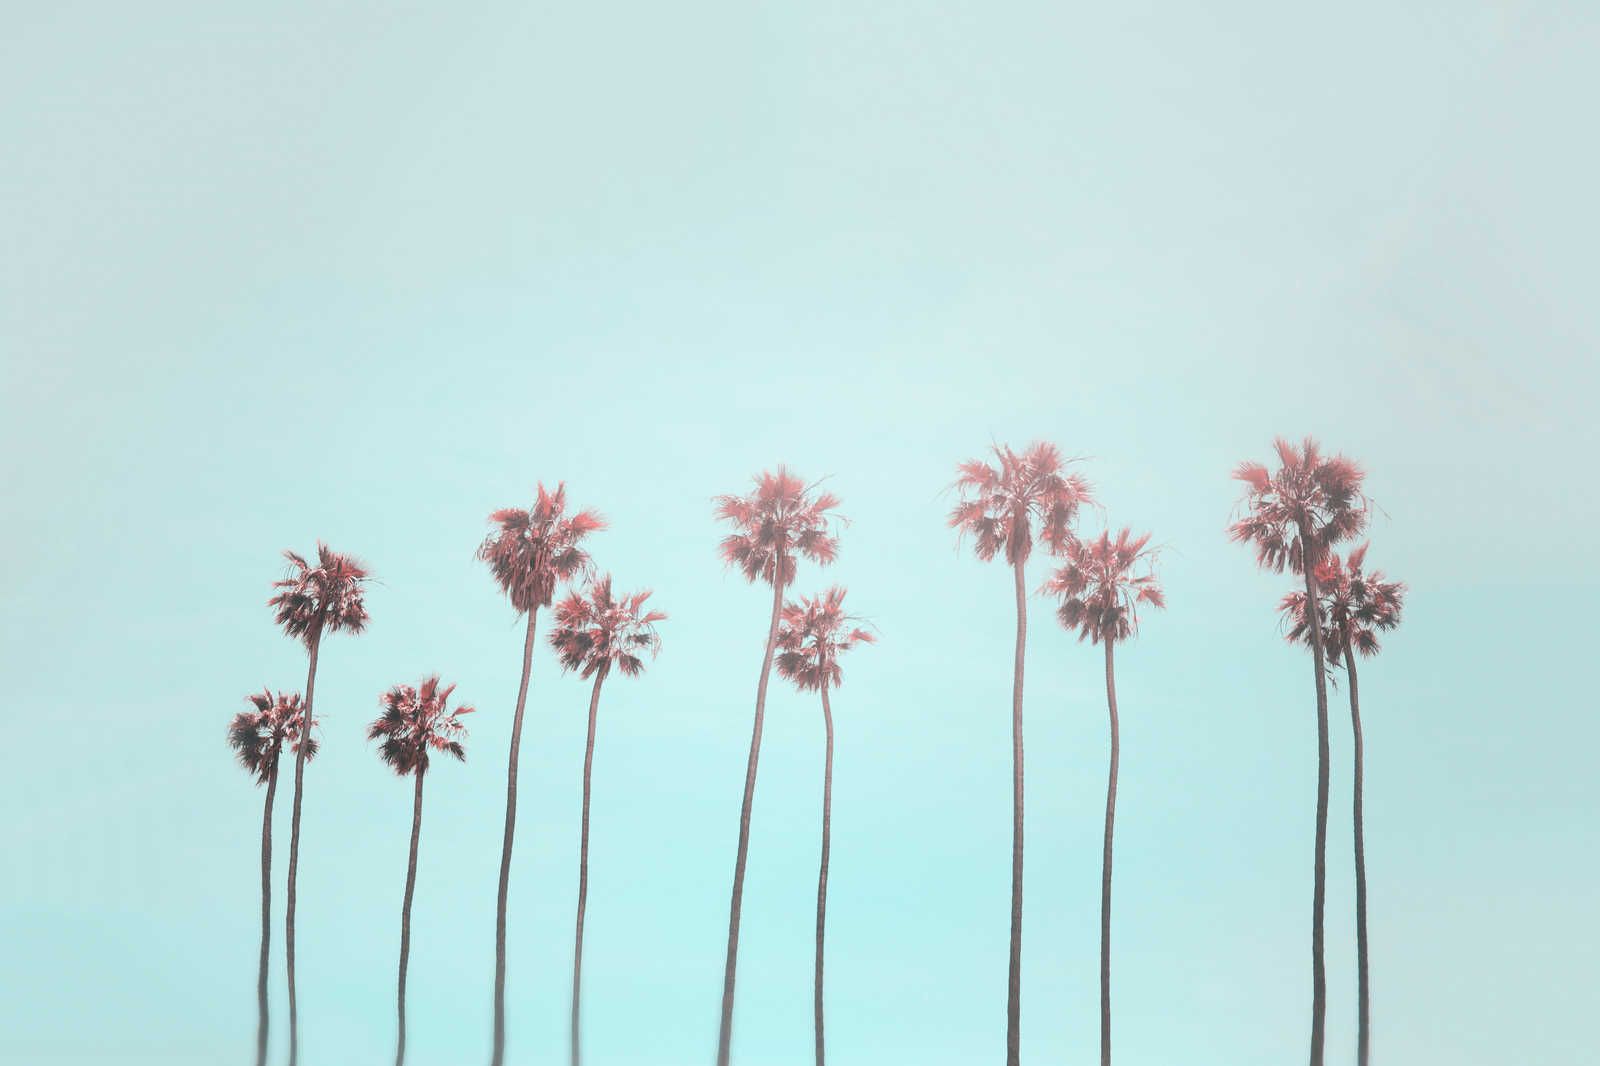             Quadro su tela Palm Trees & Sky for Beach Feeling in Turquoise & Pink - 0,90 m x 0,60 m
        